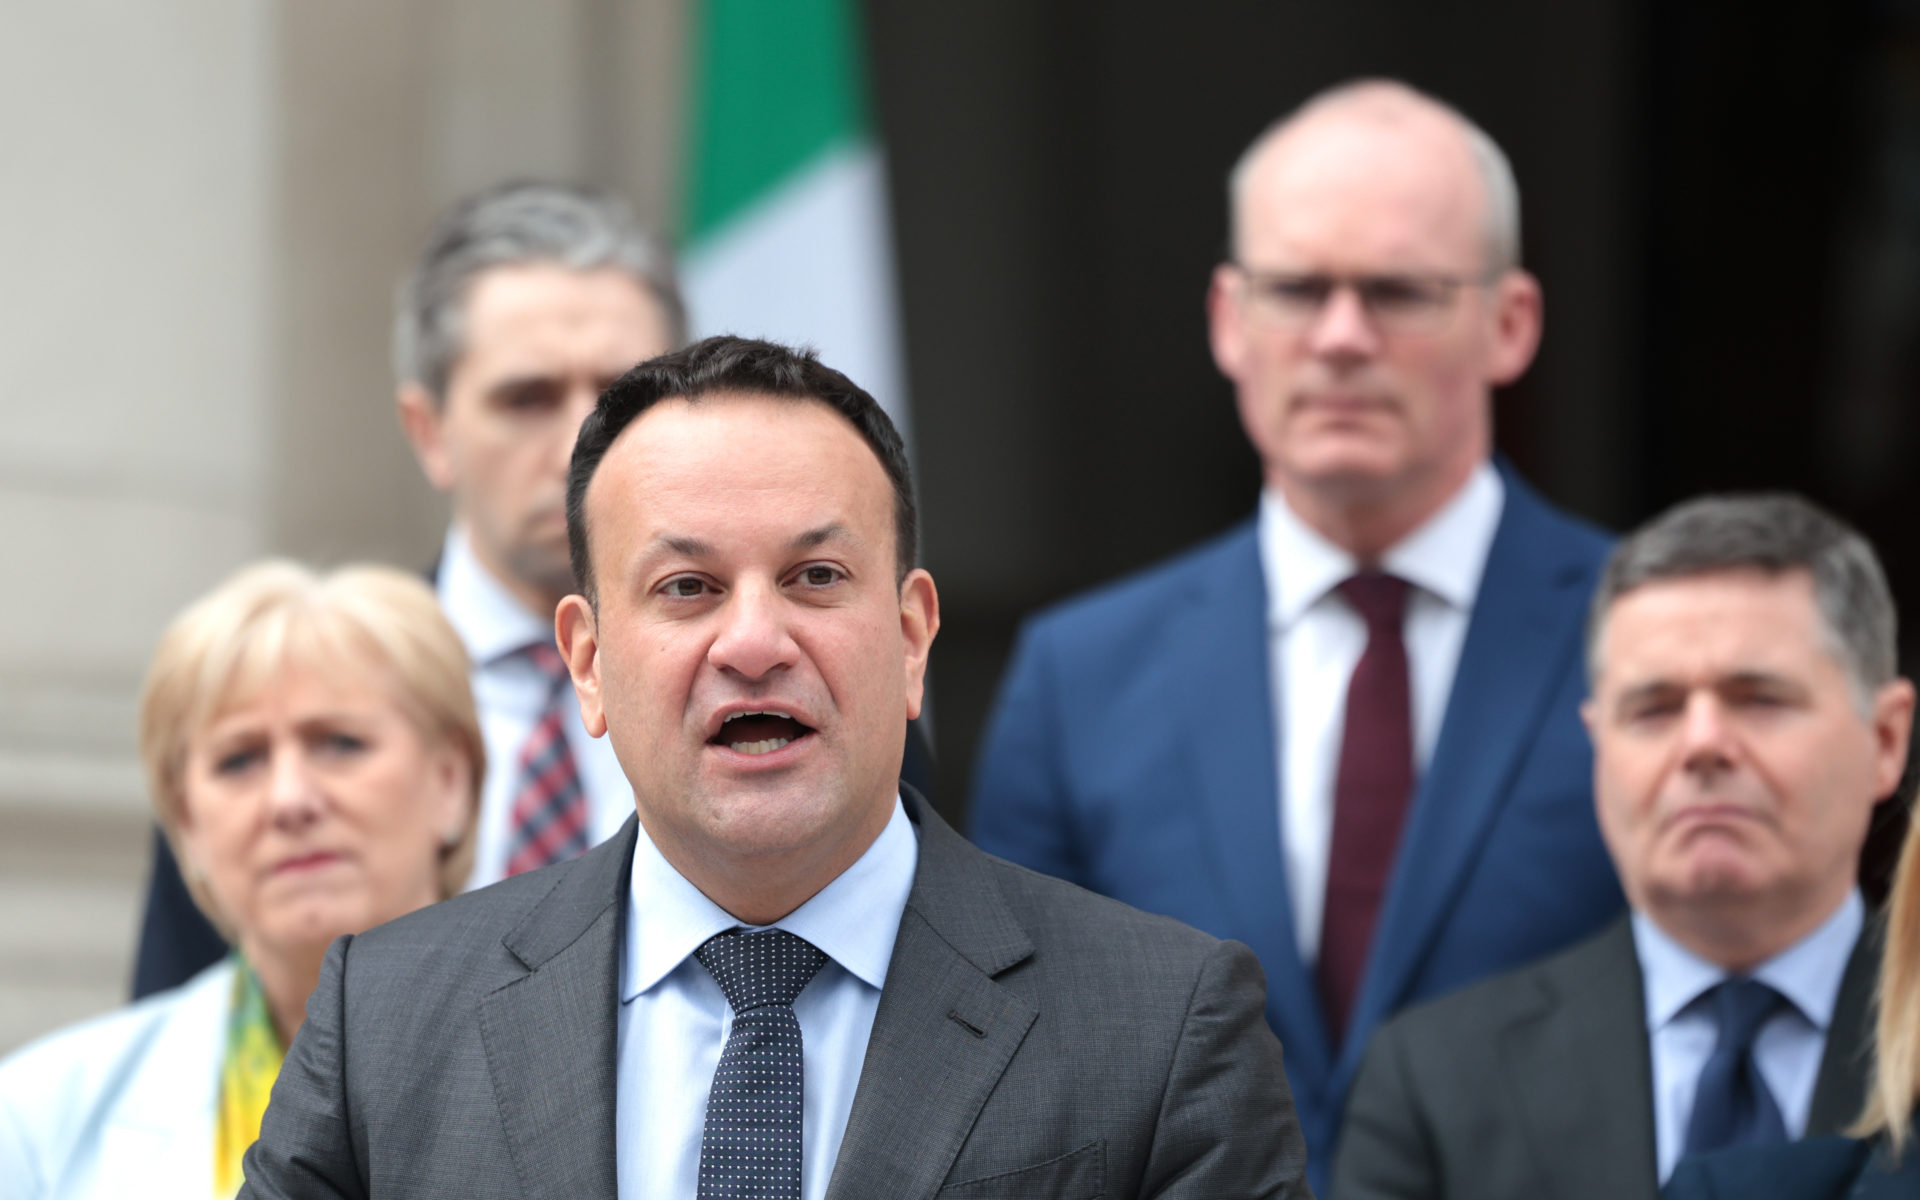 Leo Varadkar announces his resignation as Taoiseach and Fine Gael leader at Government Buildings, 20-3-24.